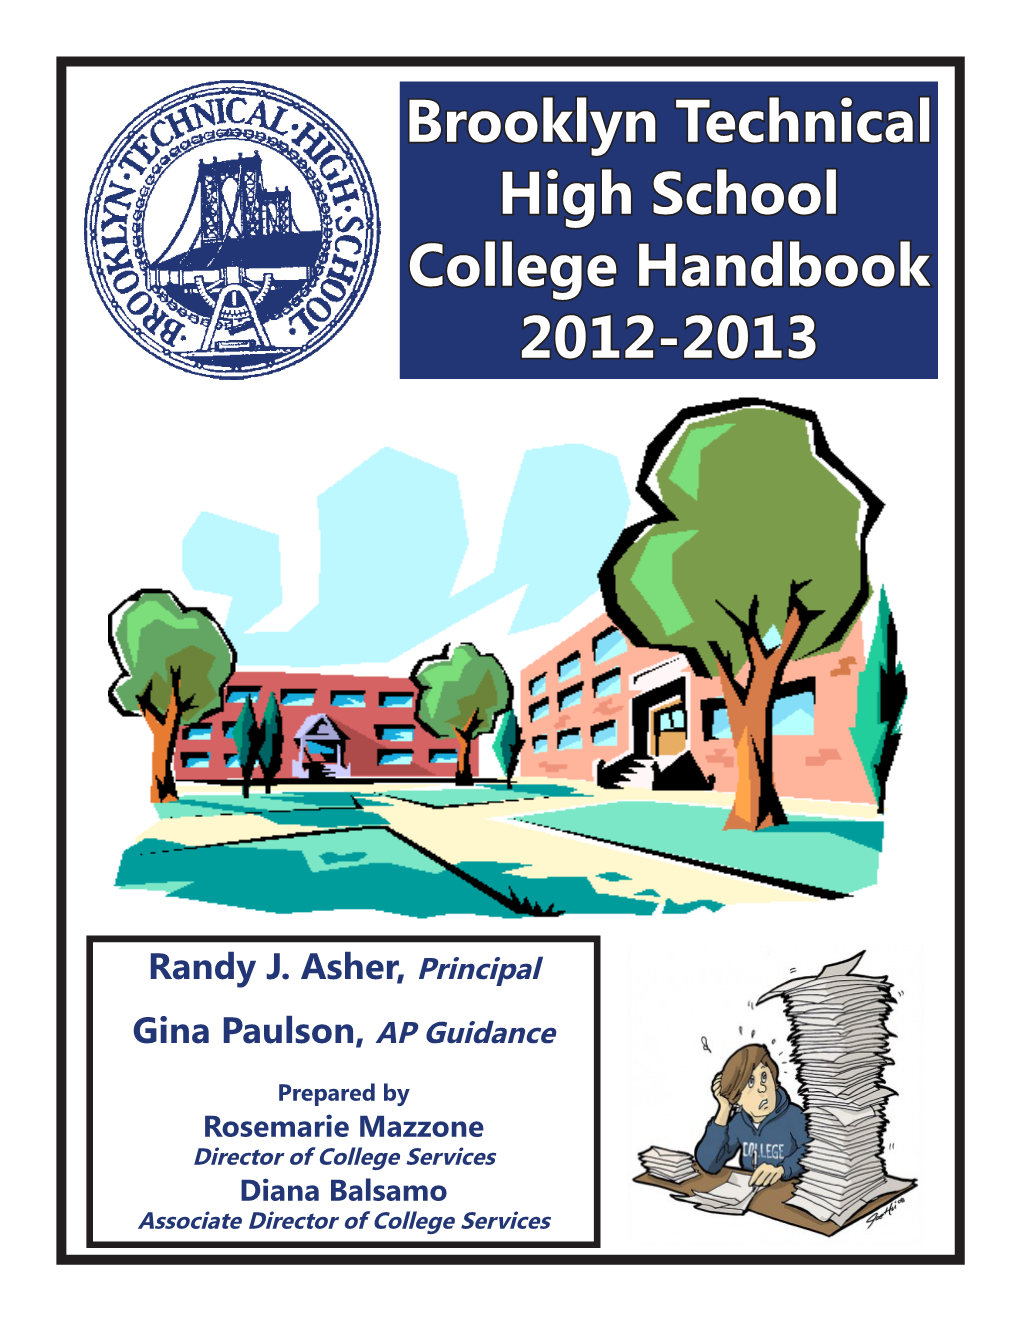 Brooklyn Technical High School College Handbook 2012-2013